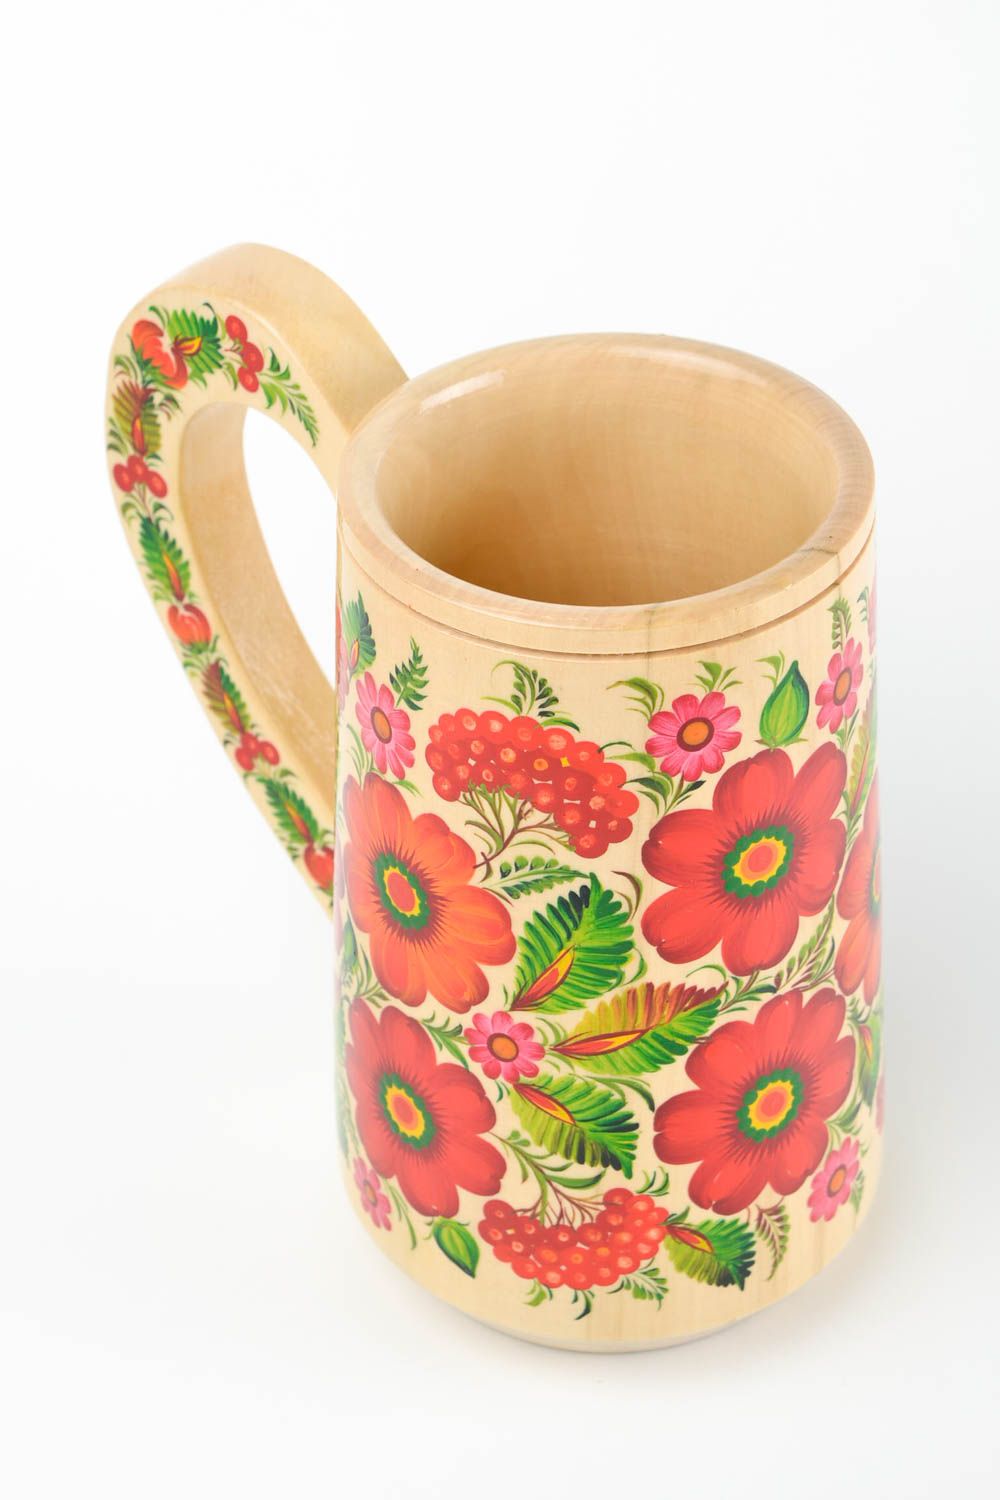 Handmade wooden mug designer glass unusual cup for kitchen decor gift ideas photo 3